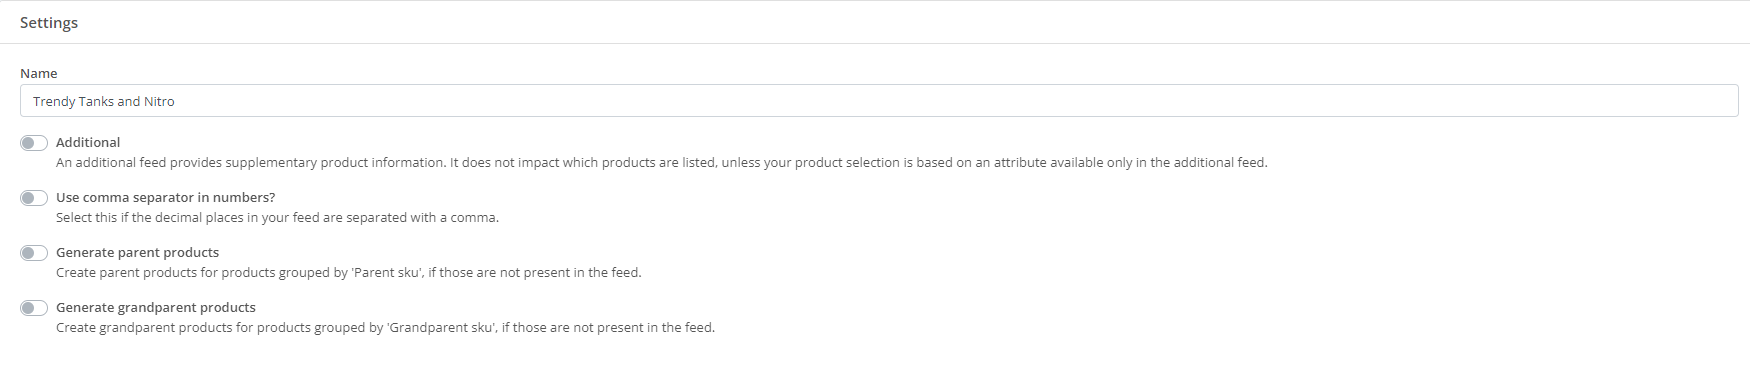 Product feed settings